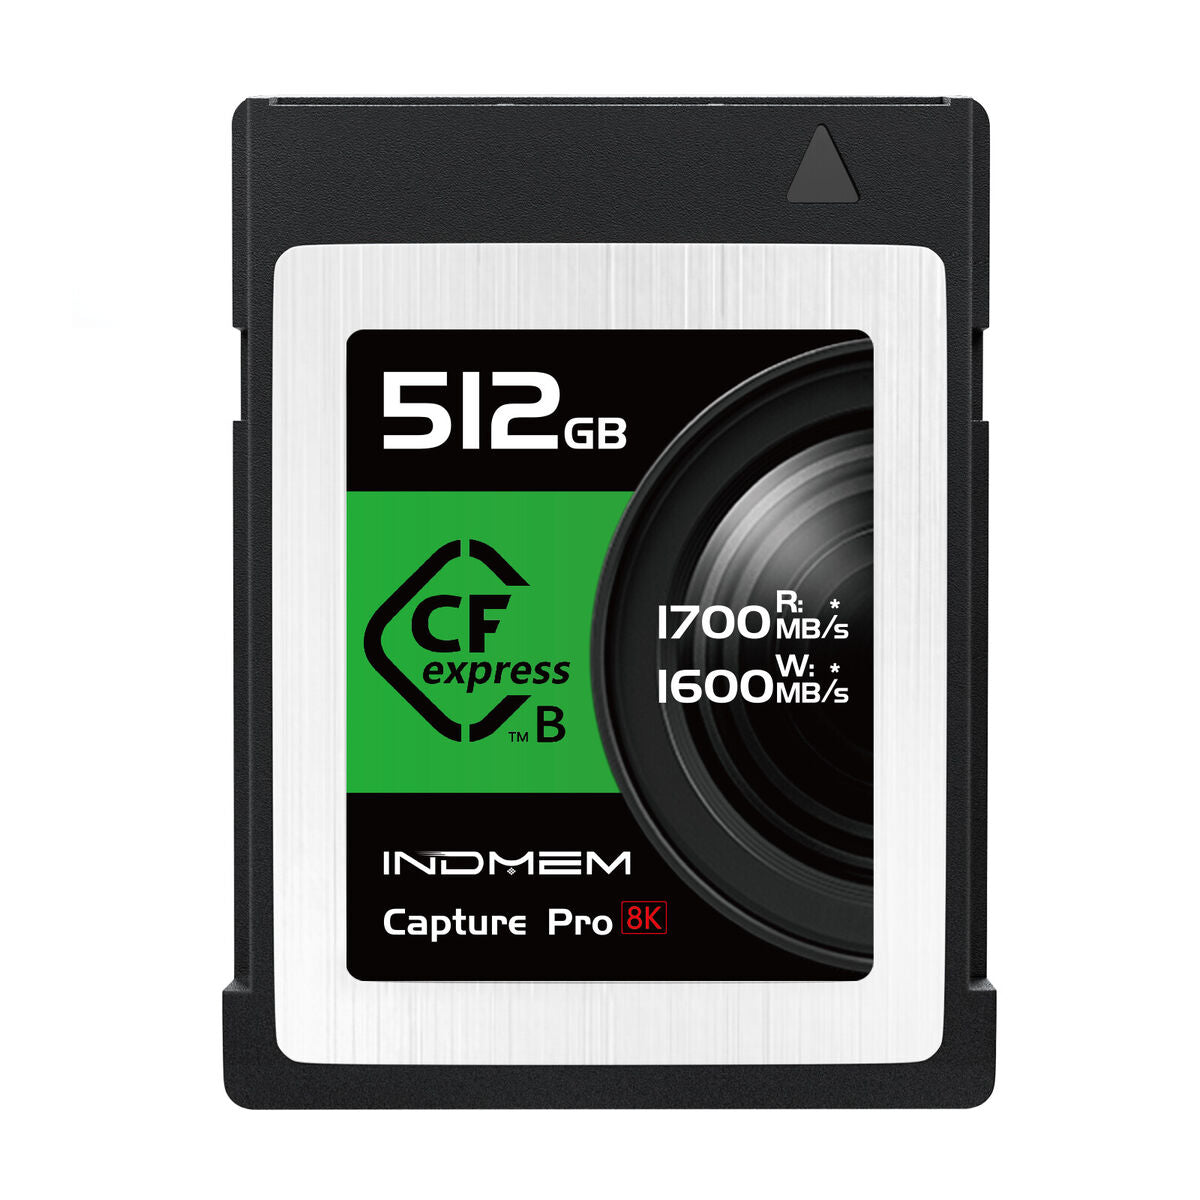 INDMEM 512GB Capture PRO 8K CFexpress Type B Memory Card